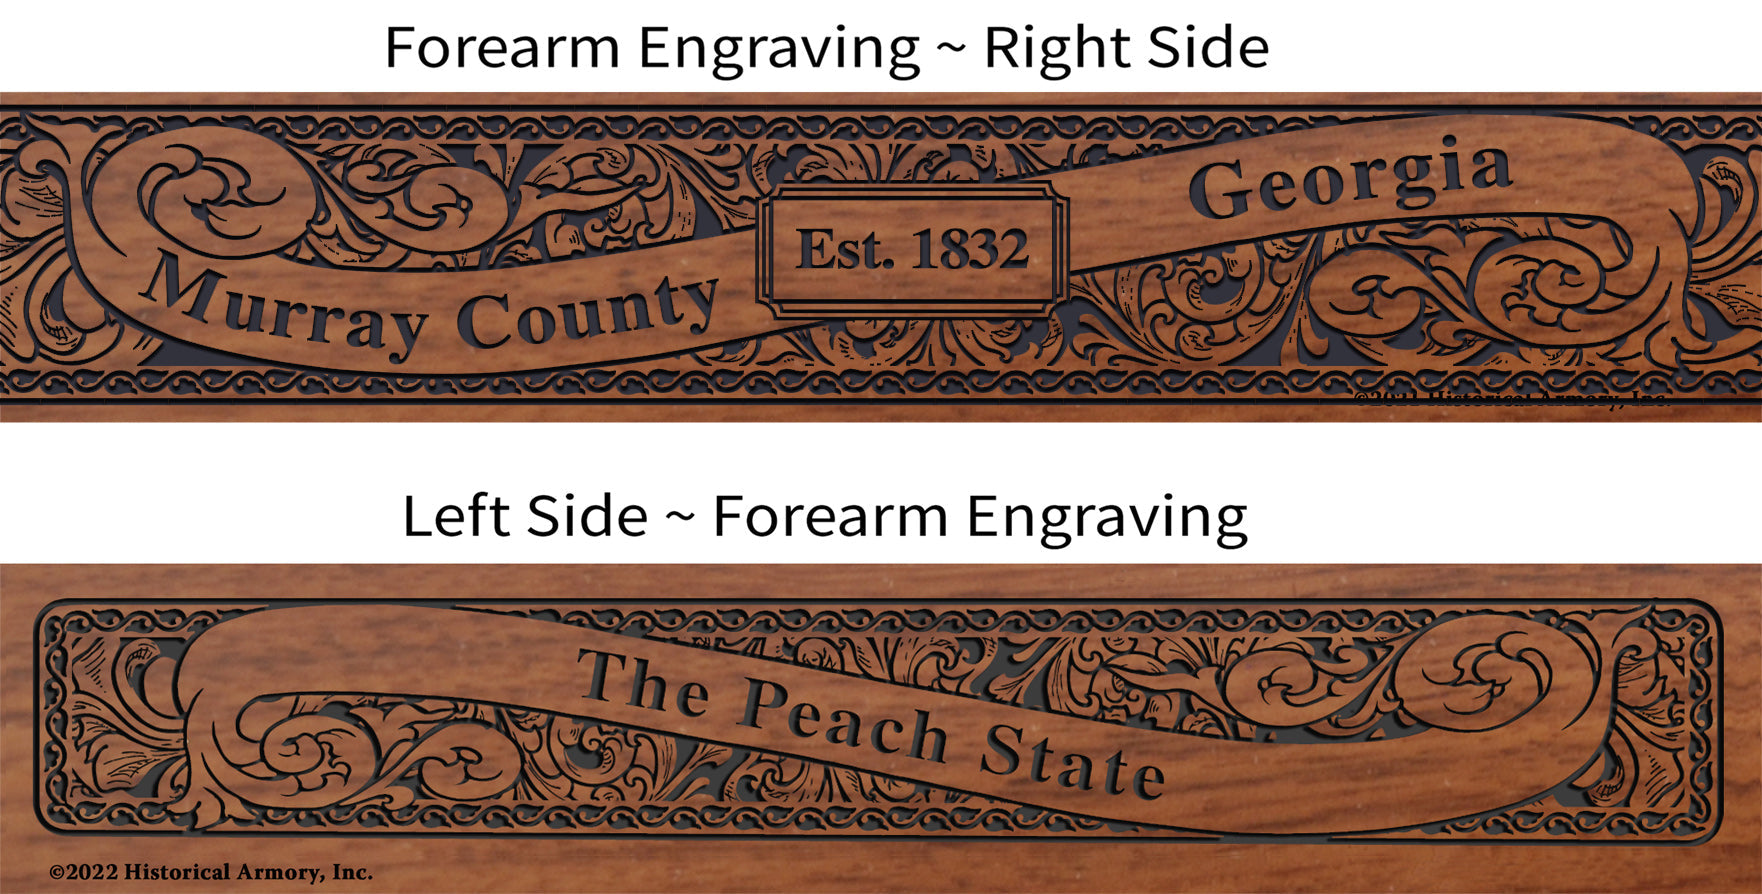 Murray County Georgia Establishment and Motto History Engraved Rifle Forearm